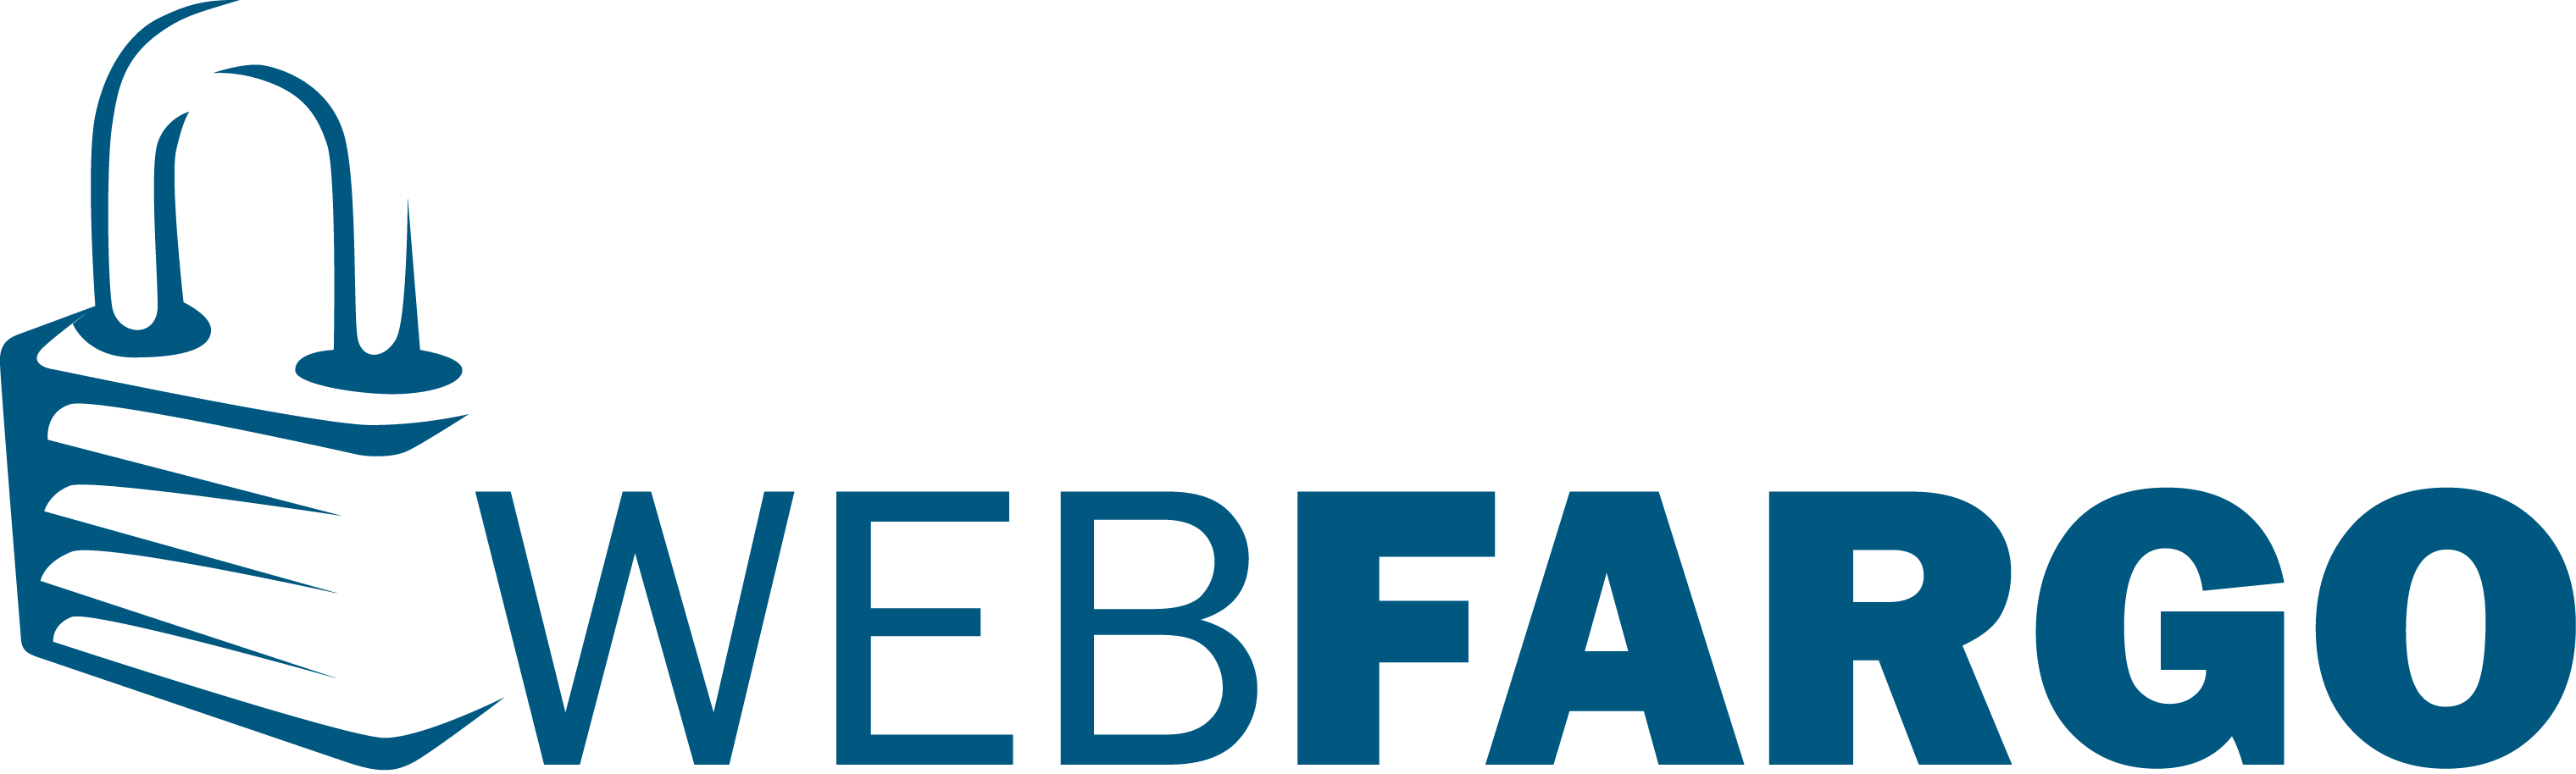 Webfargo Data Security Cybersecurity Logo